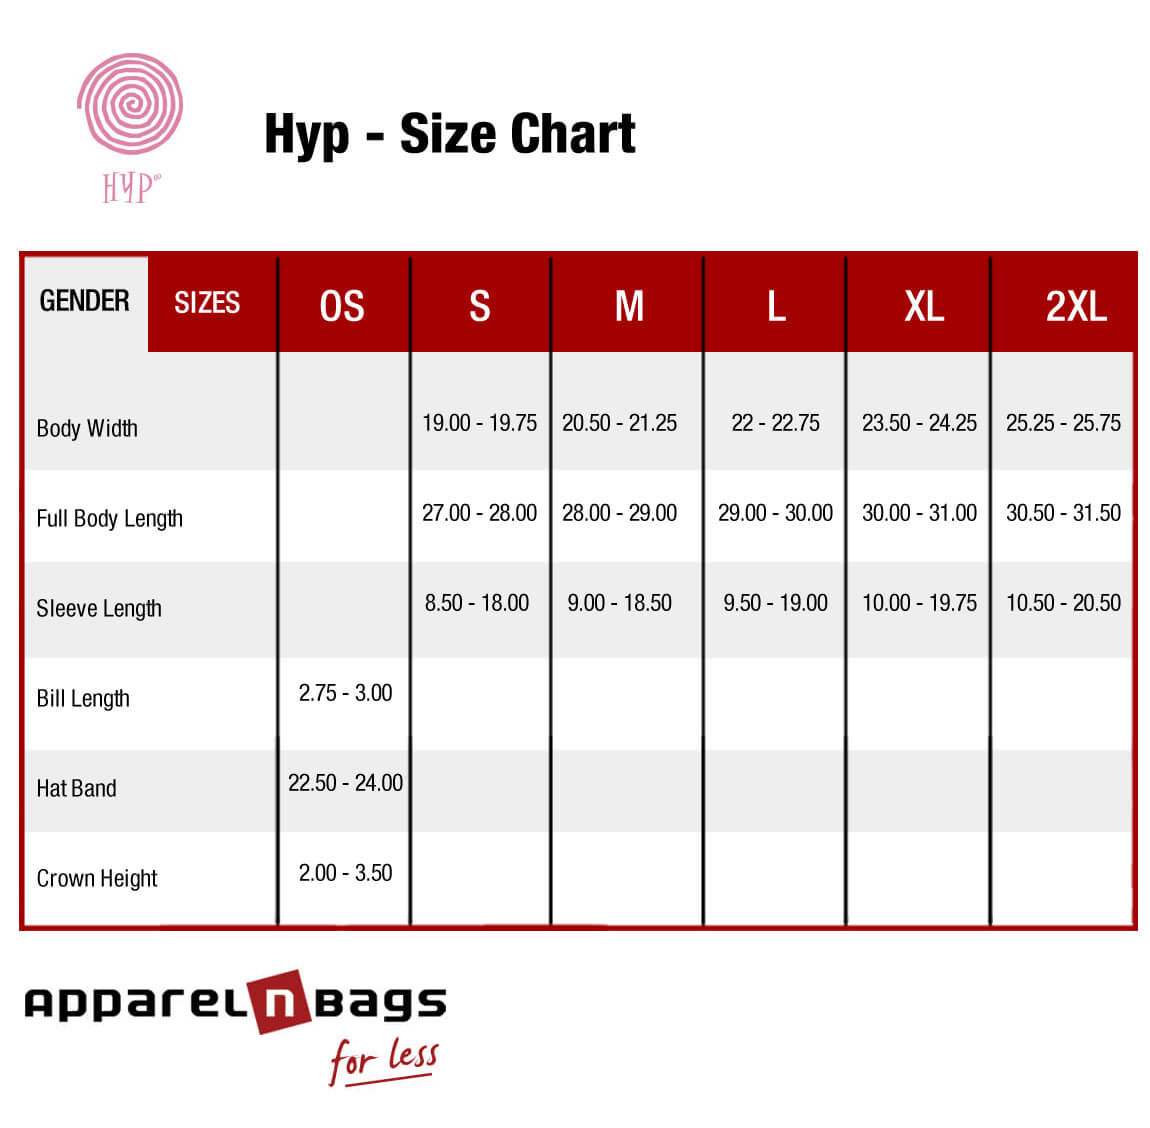 Hyp - Size Chart